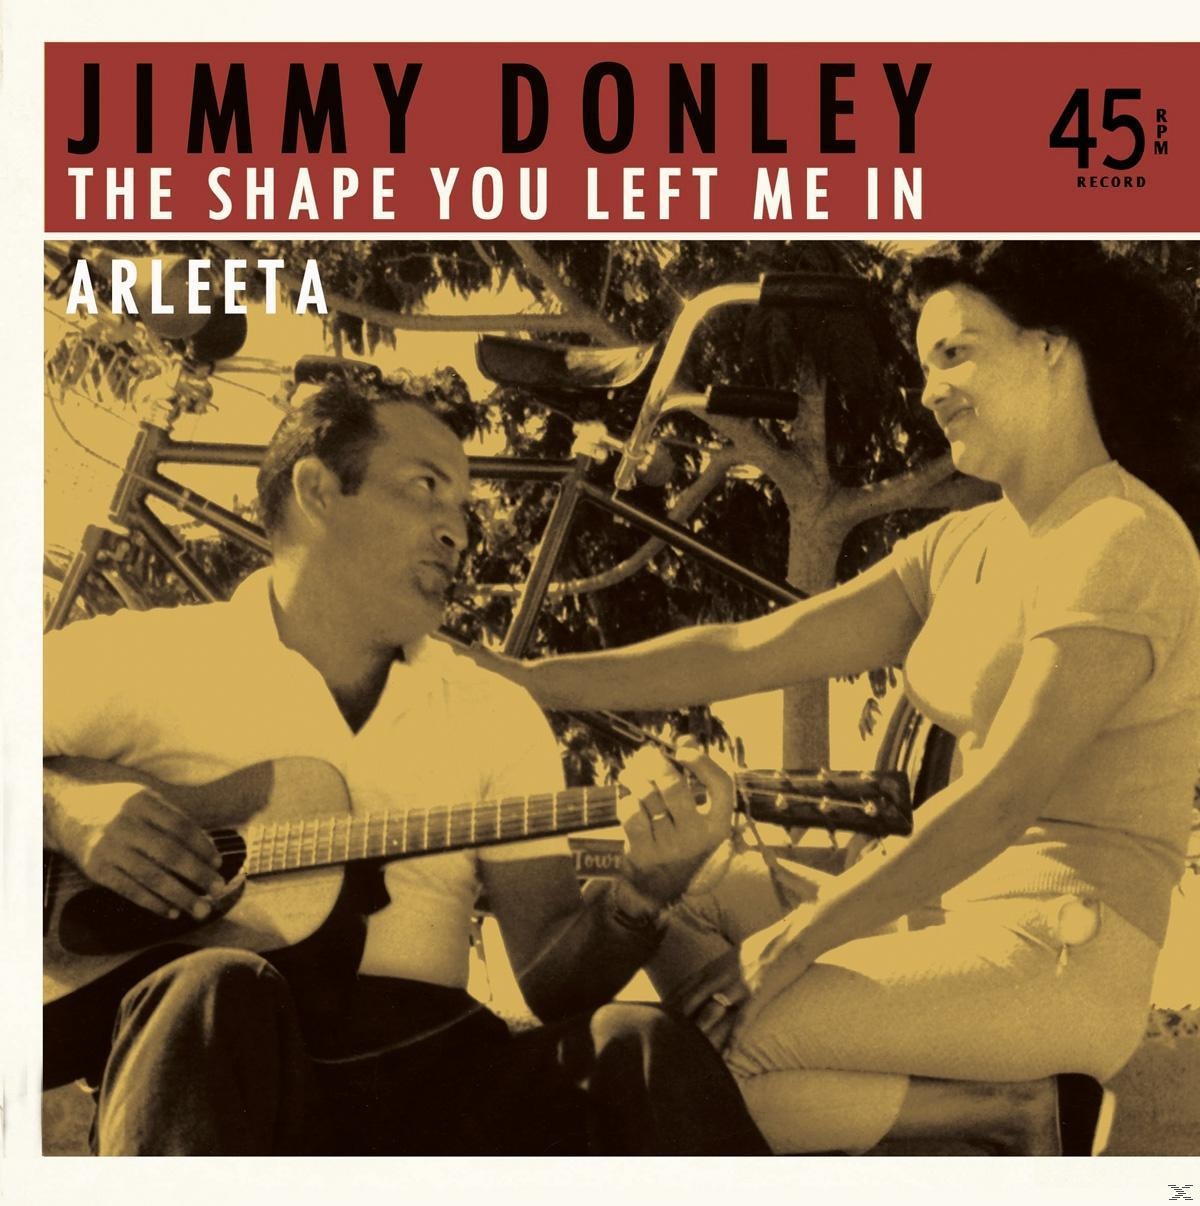 In Donley - Arleeta Left Shape B/W 45rpm/Ps Jimmy Me (Vinyl) - You The